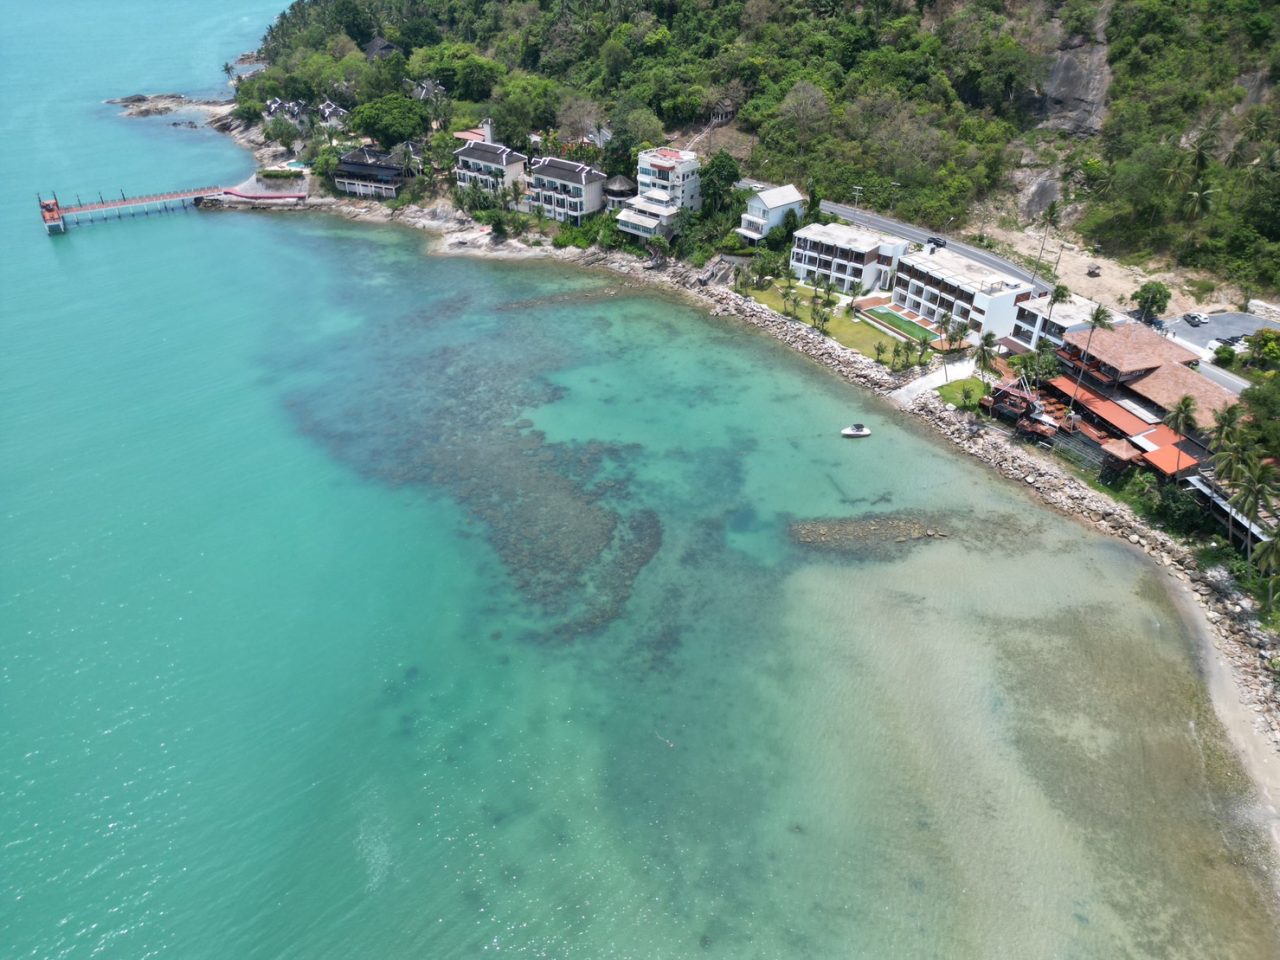 X-Sea Khanom Harbor Bay Resort